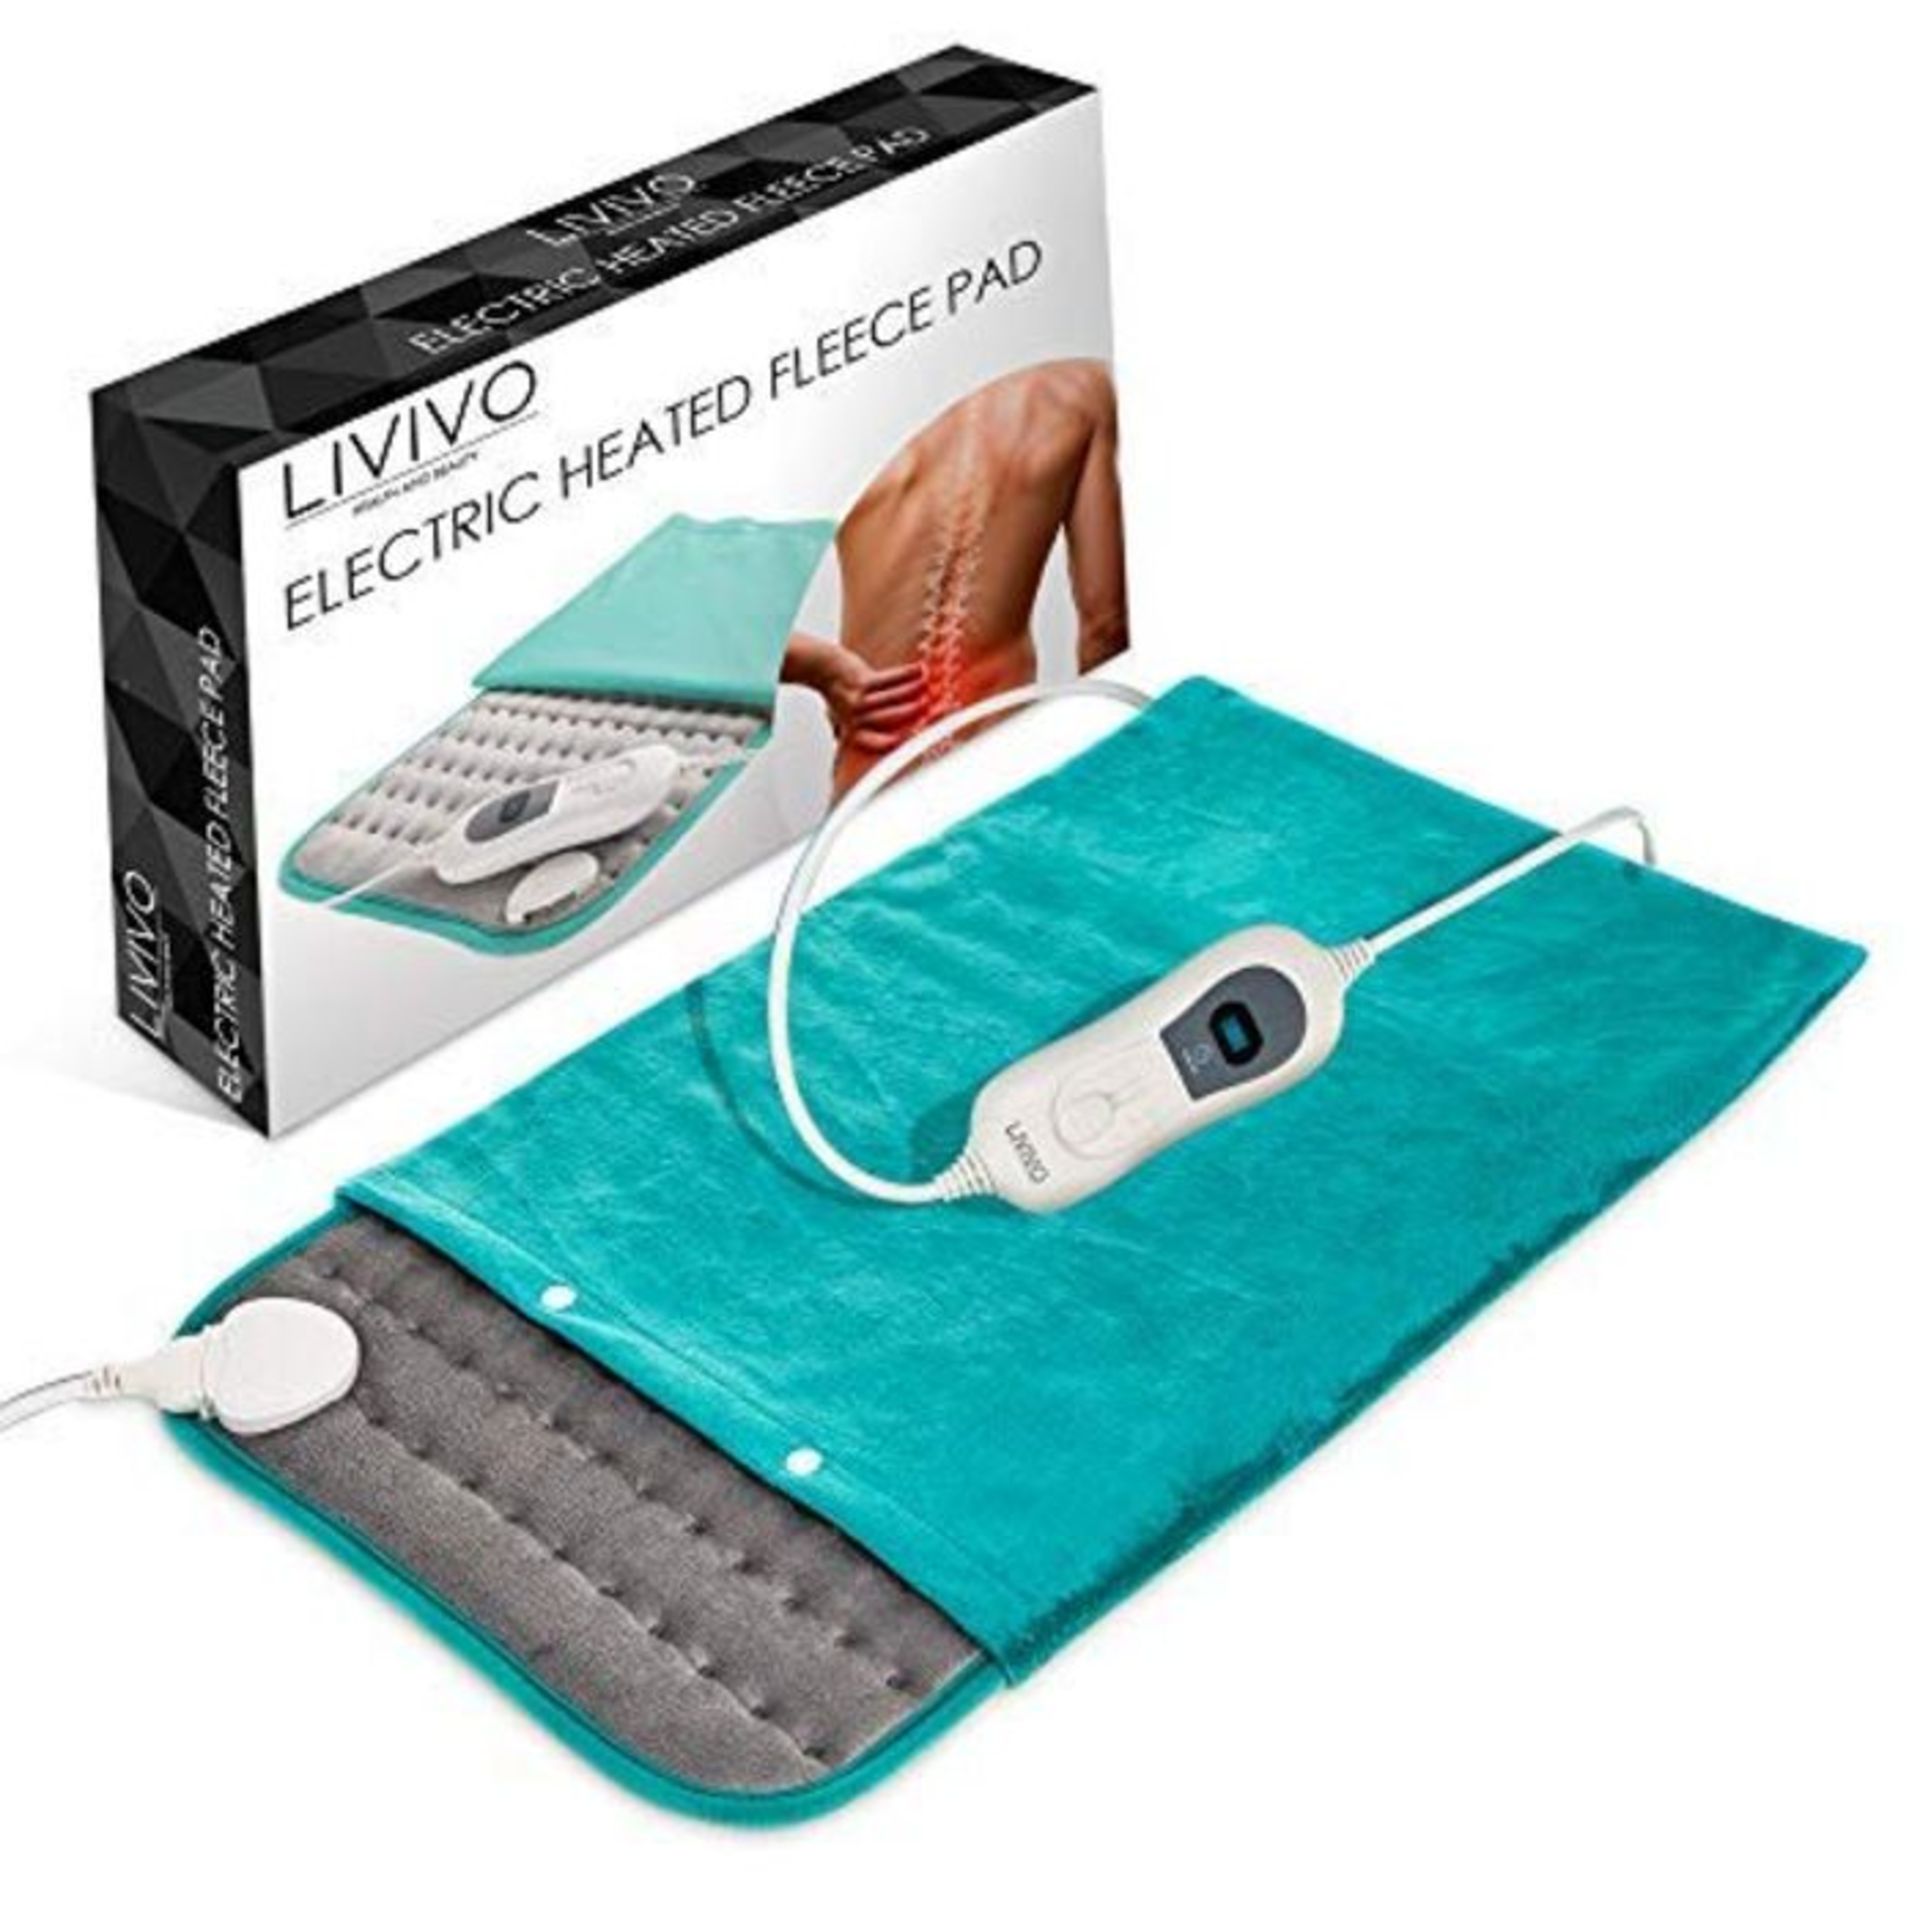 LIVIVO Electric Heated Fleece Pad with Washable Fleece Cover, Detachable Digital Contr